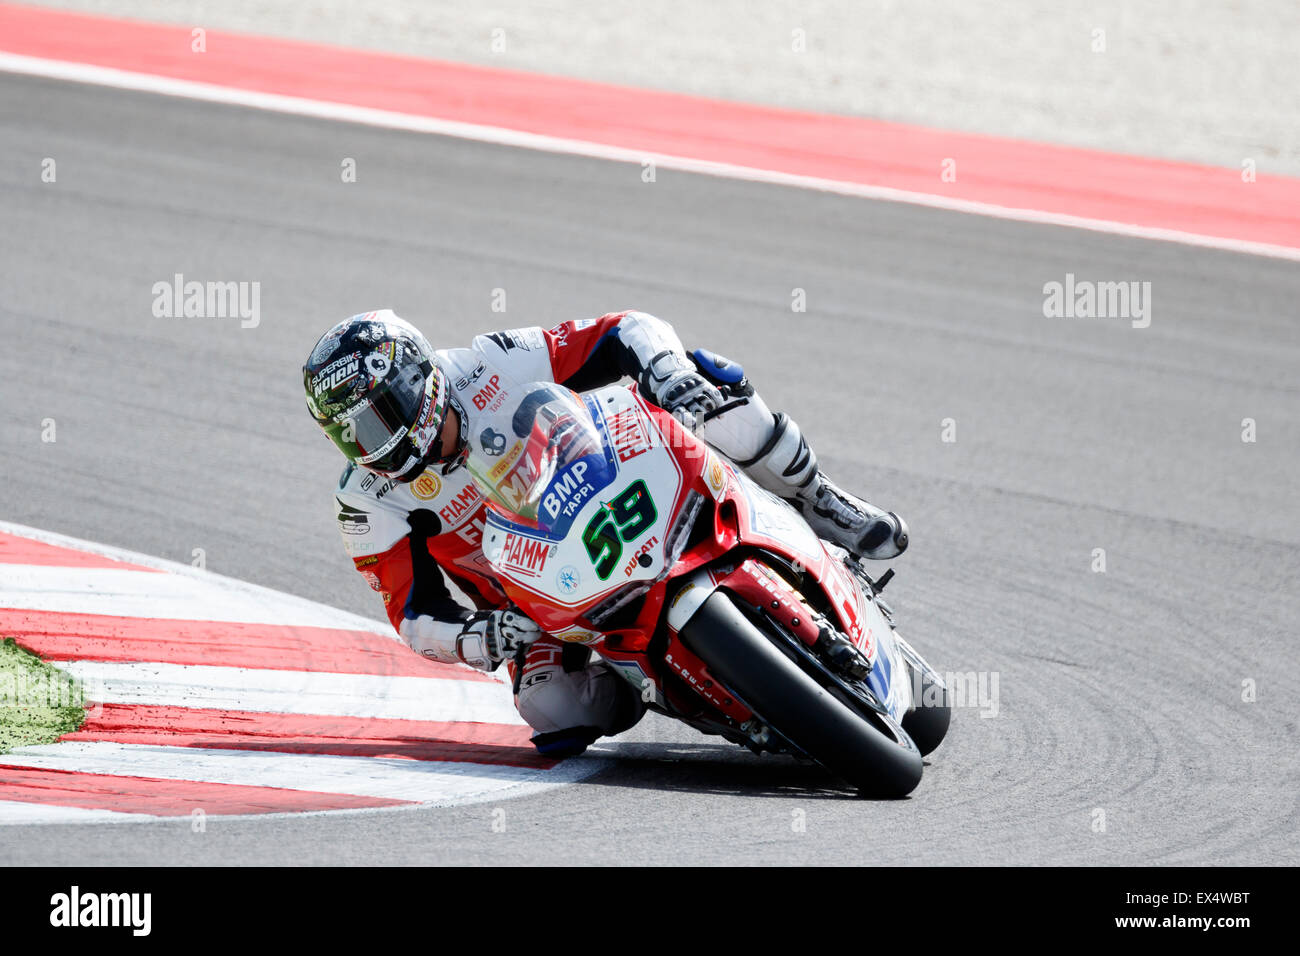 Misano Adriatico, Italy - June 21, 2015: Ducati Panigale R of Althea Racing Team, driven by CANEPA Niccolò Stock Photo